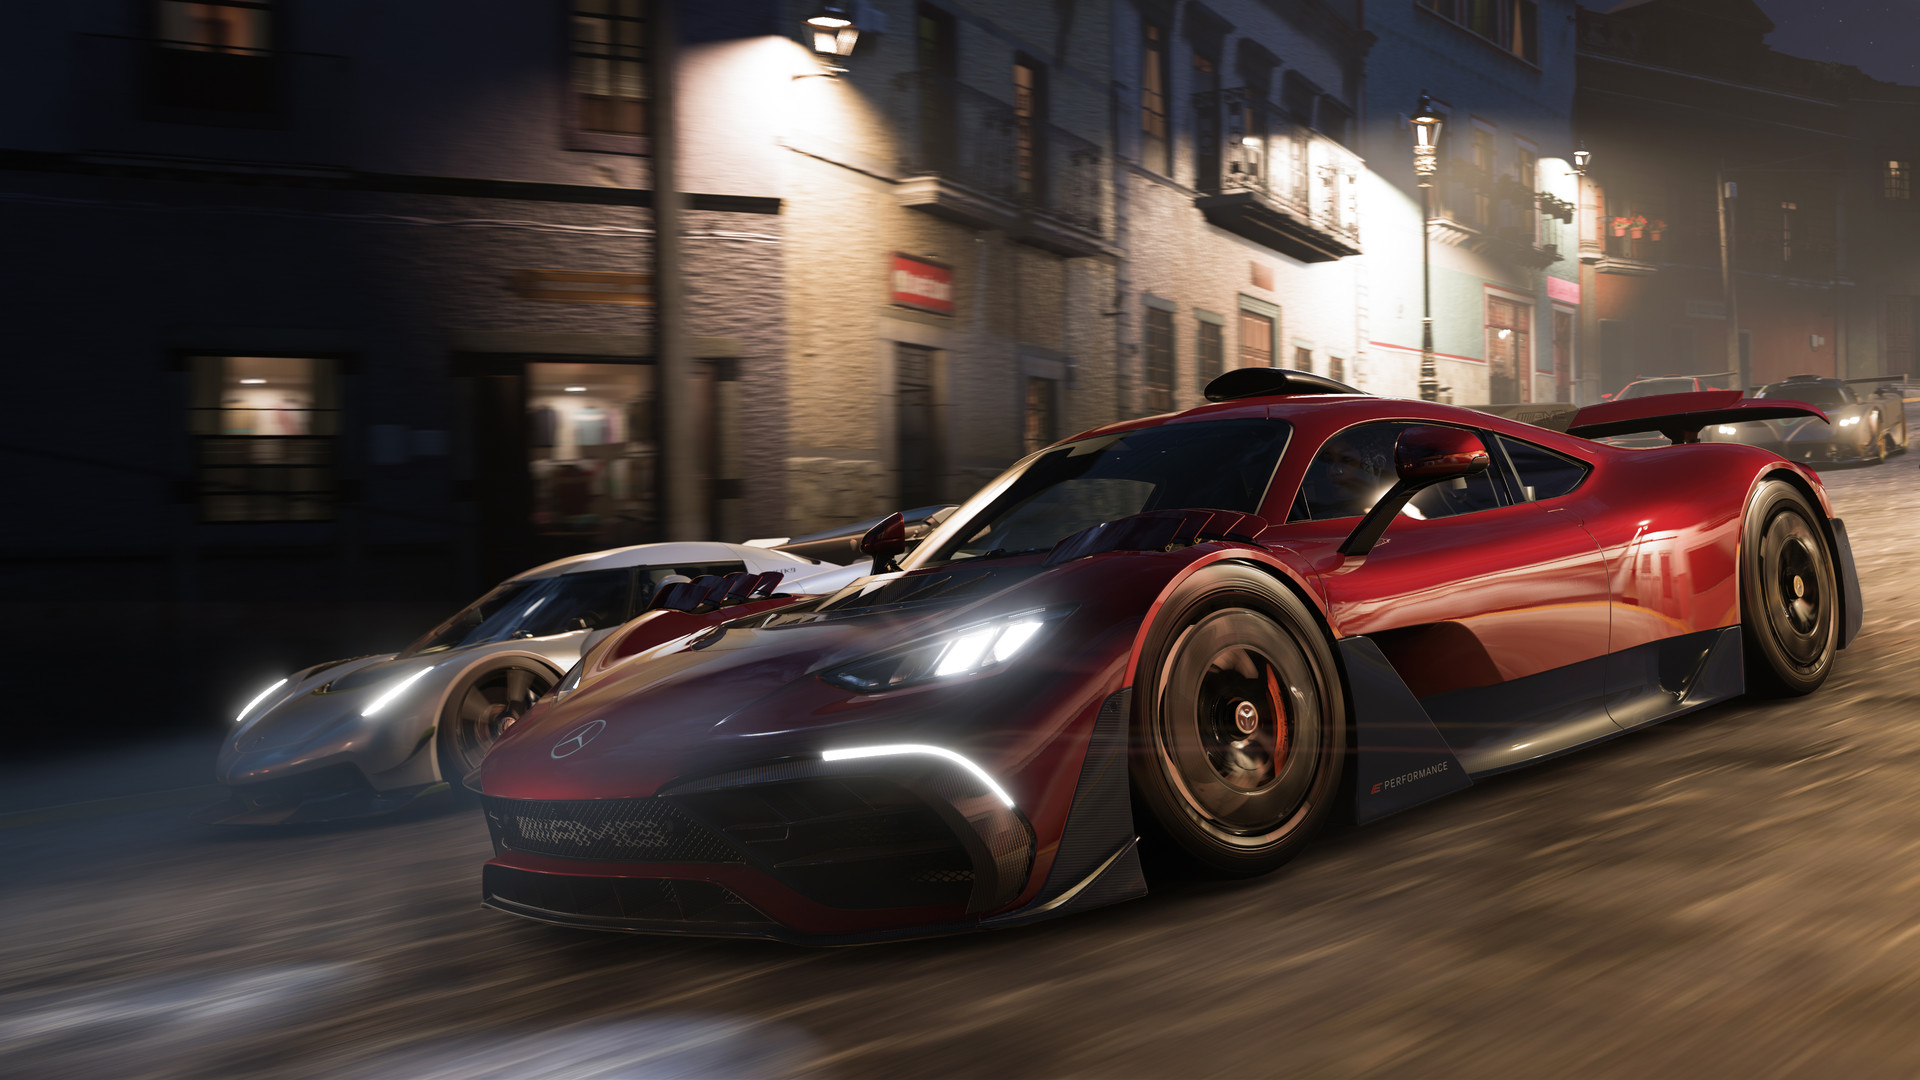 Save 40% on Forza Horizon 5 on Steam